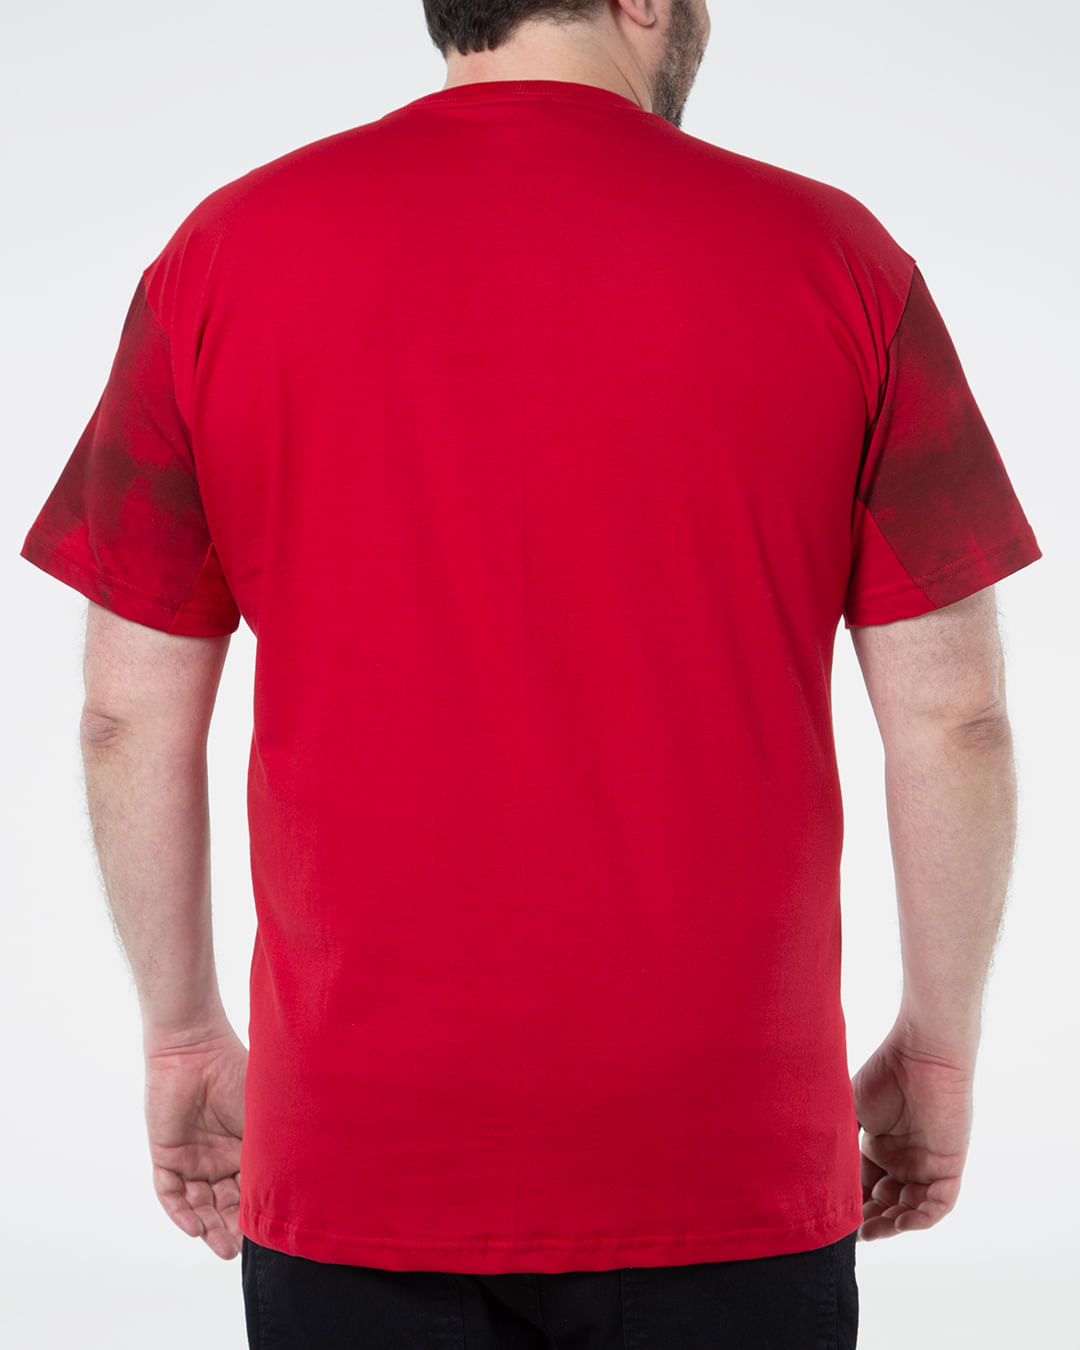 Camiseta-Masculina-Plus-Size-Tie-Dye-Fatal-Vermelha